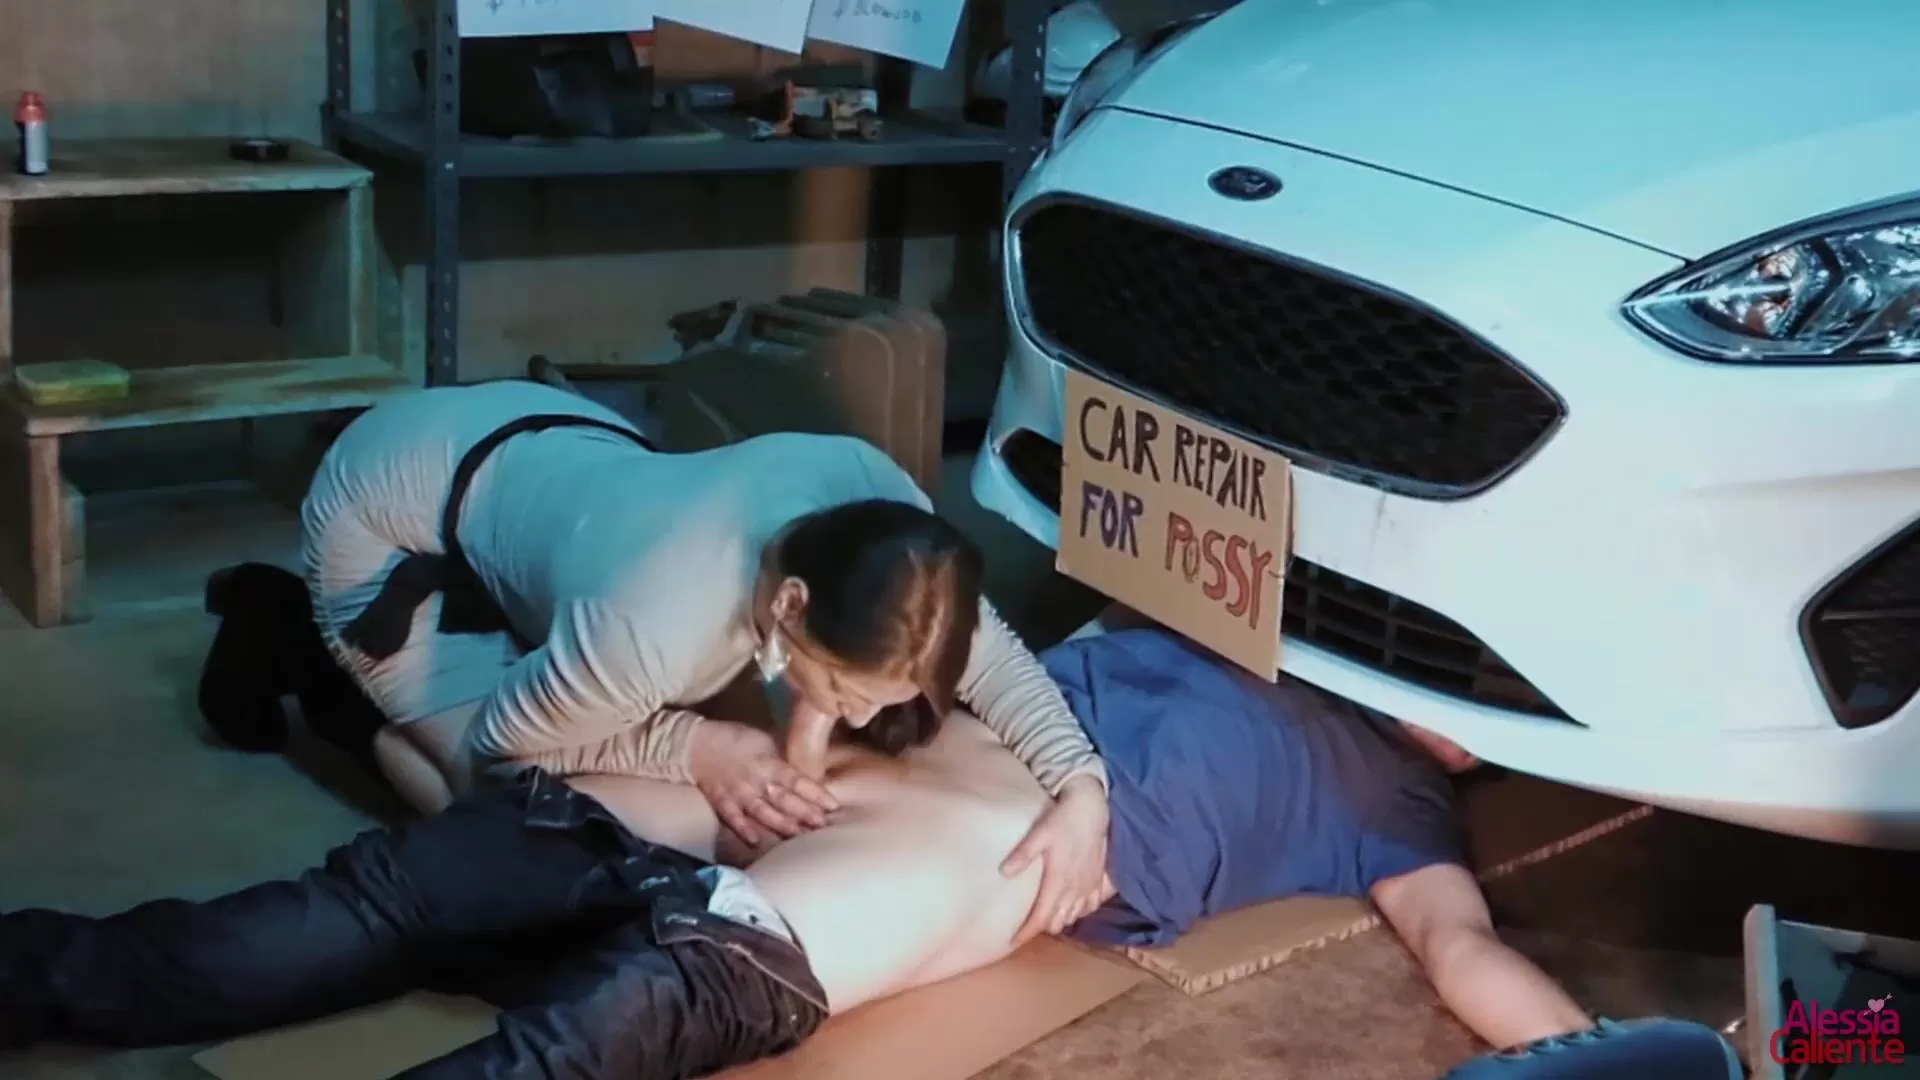 Slutty Customer Bangs Her Mechanic - Car Repair for Pussy - Alessia  Caliente watch online